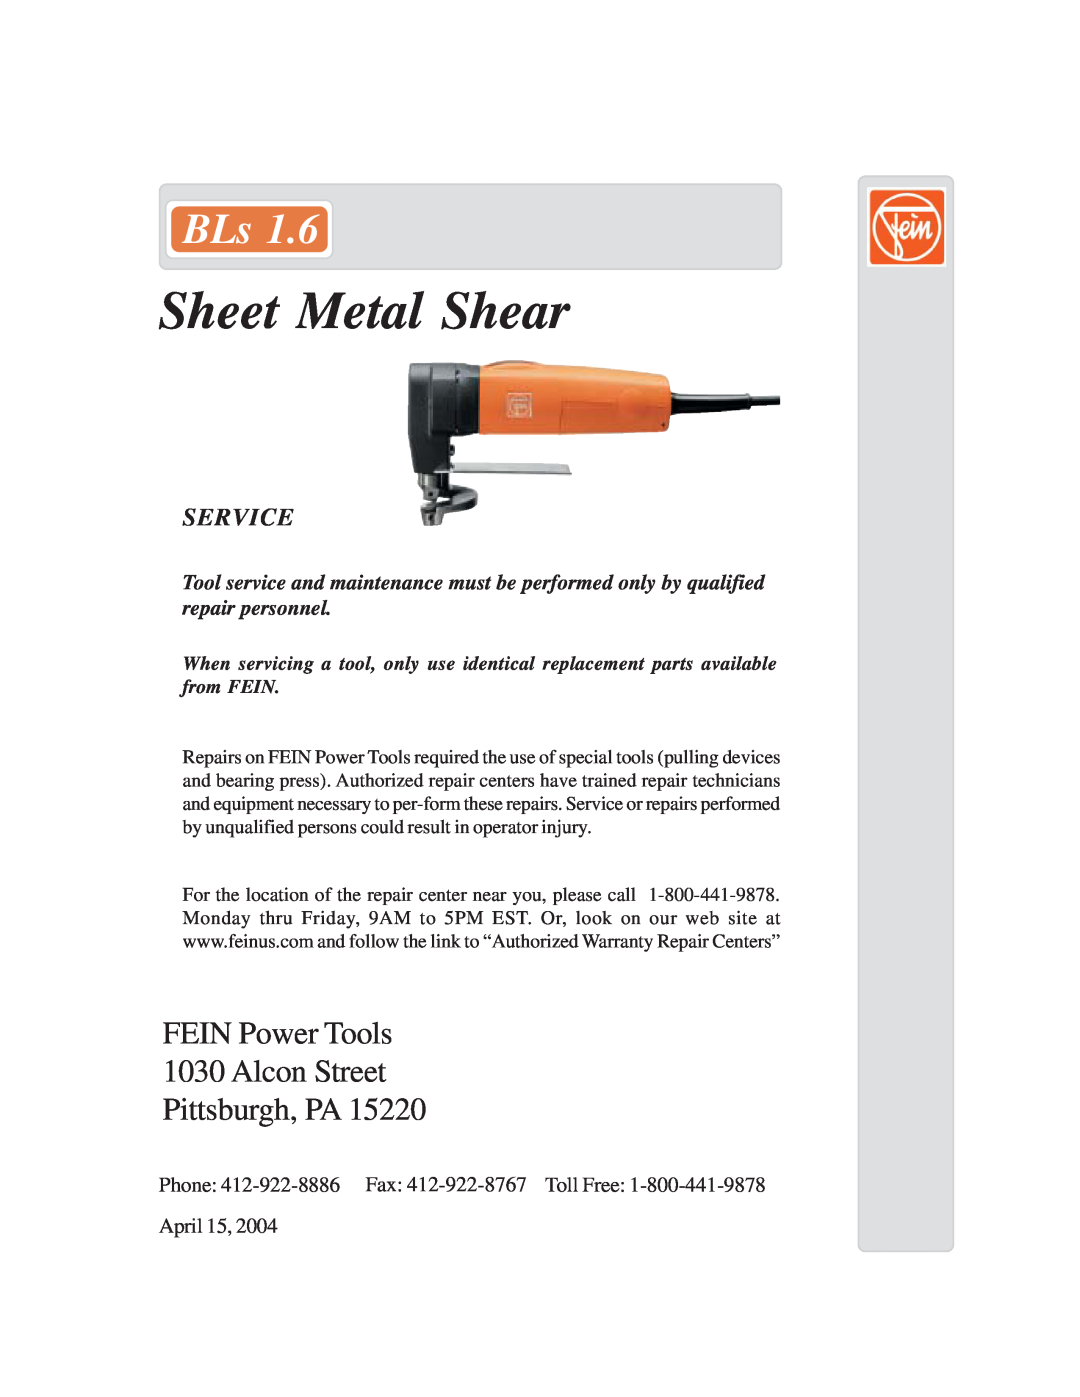 FEIN Power Tools BLs 1.6 warranty Sheet Metal Shear, FEIN Power Tools 1030 Alcon Street Pittsburgh, PA, Service, April 